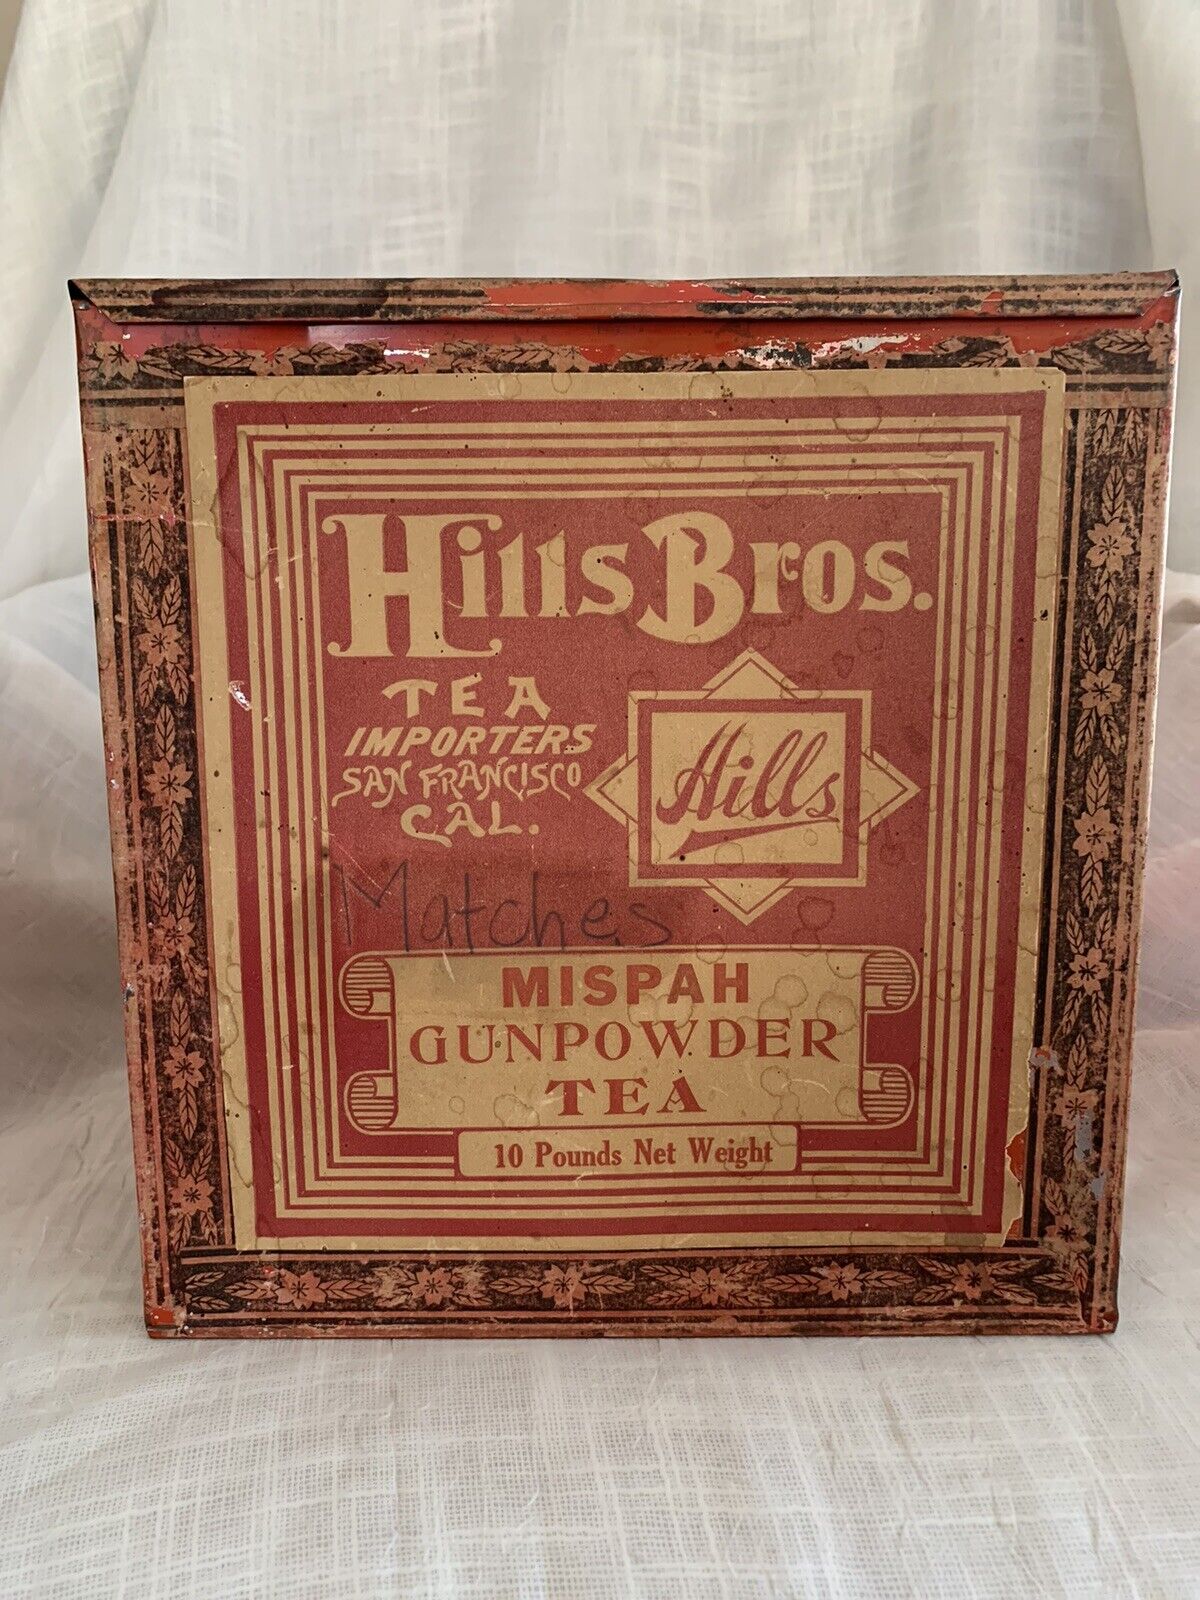 Antique: Hills Bros. Tea Importers San Francisco, Cal. Mispah Gunpowder Tea Tin